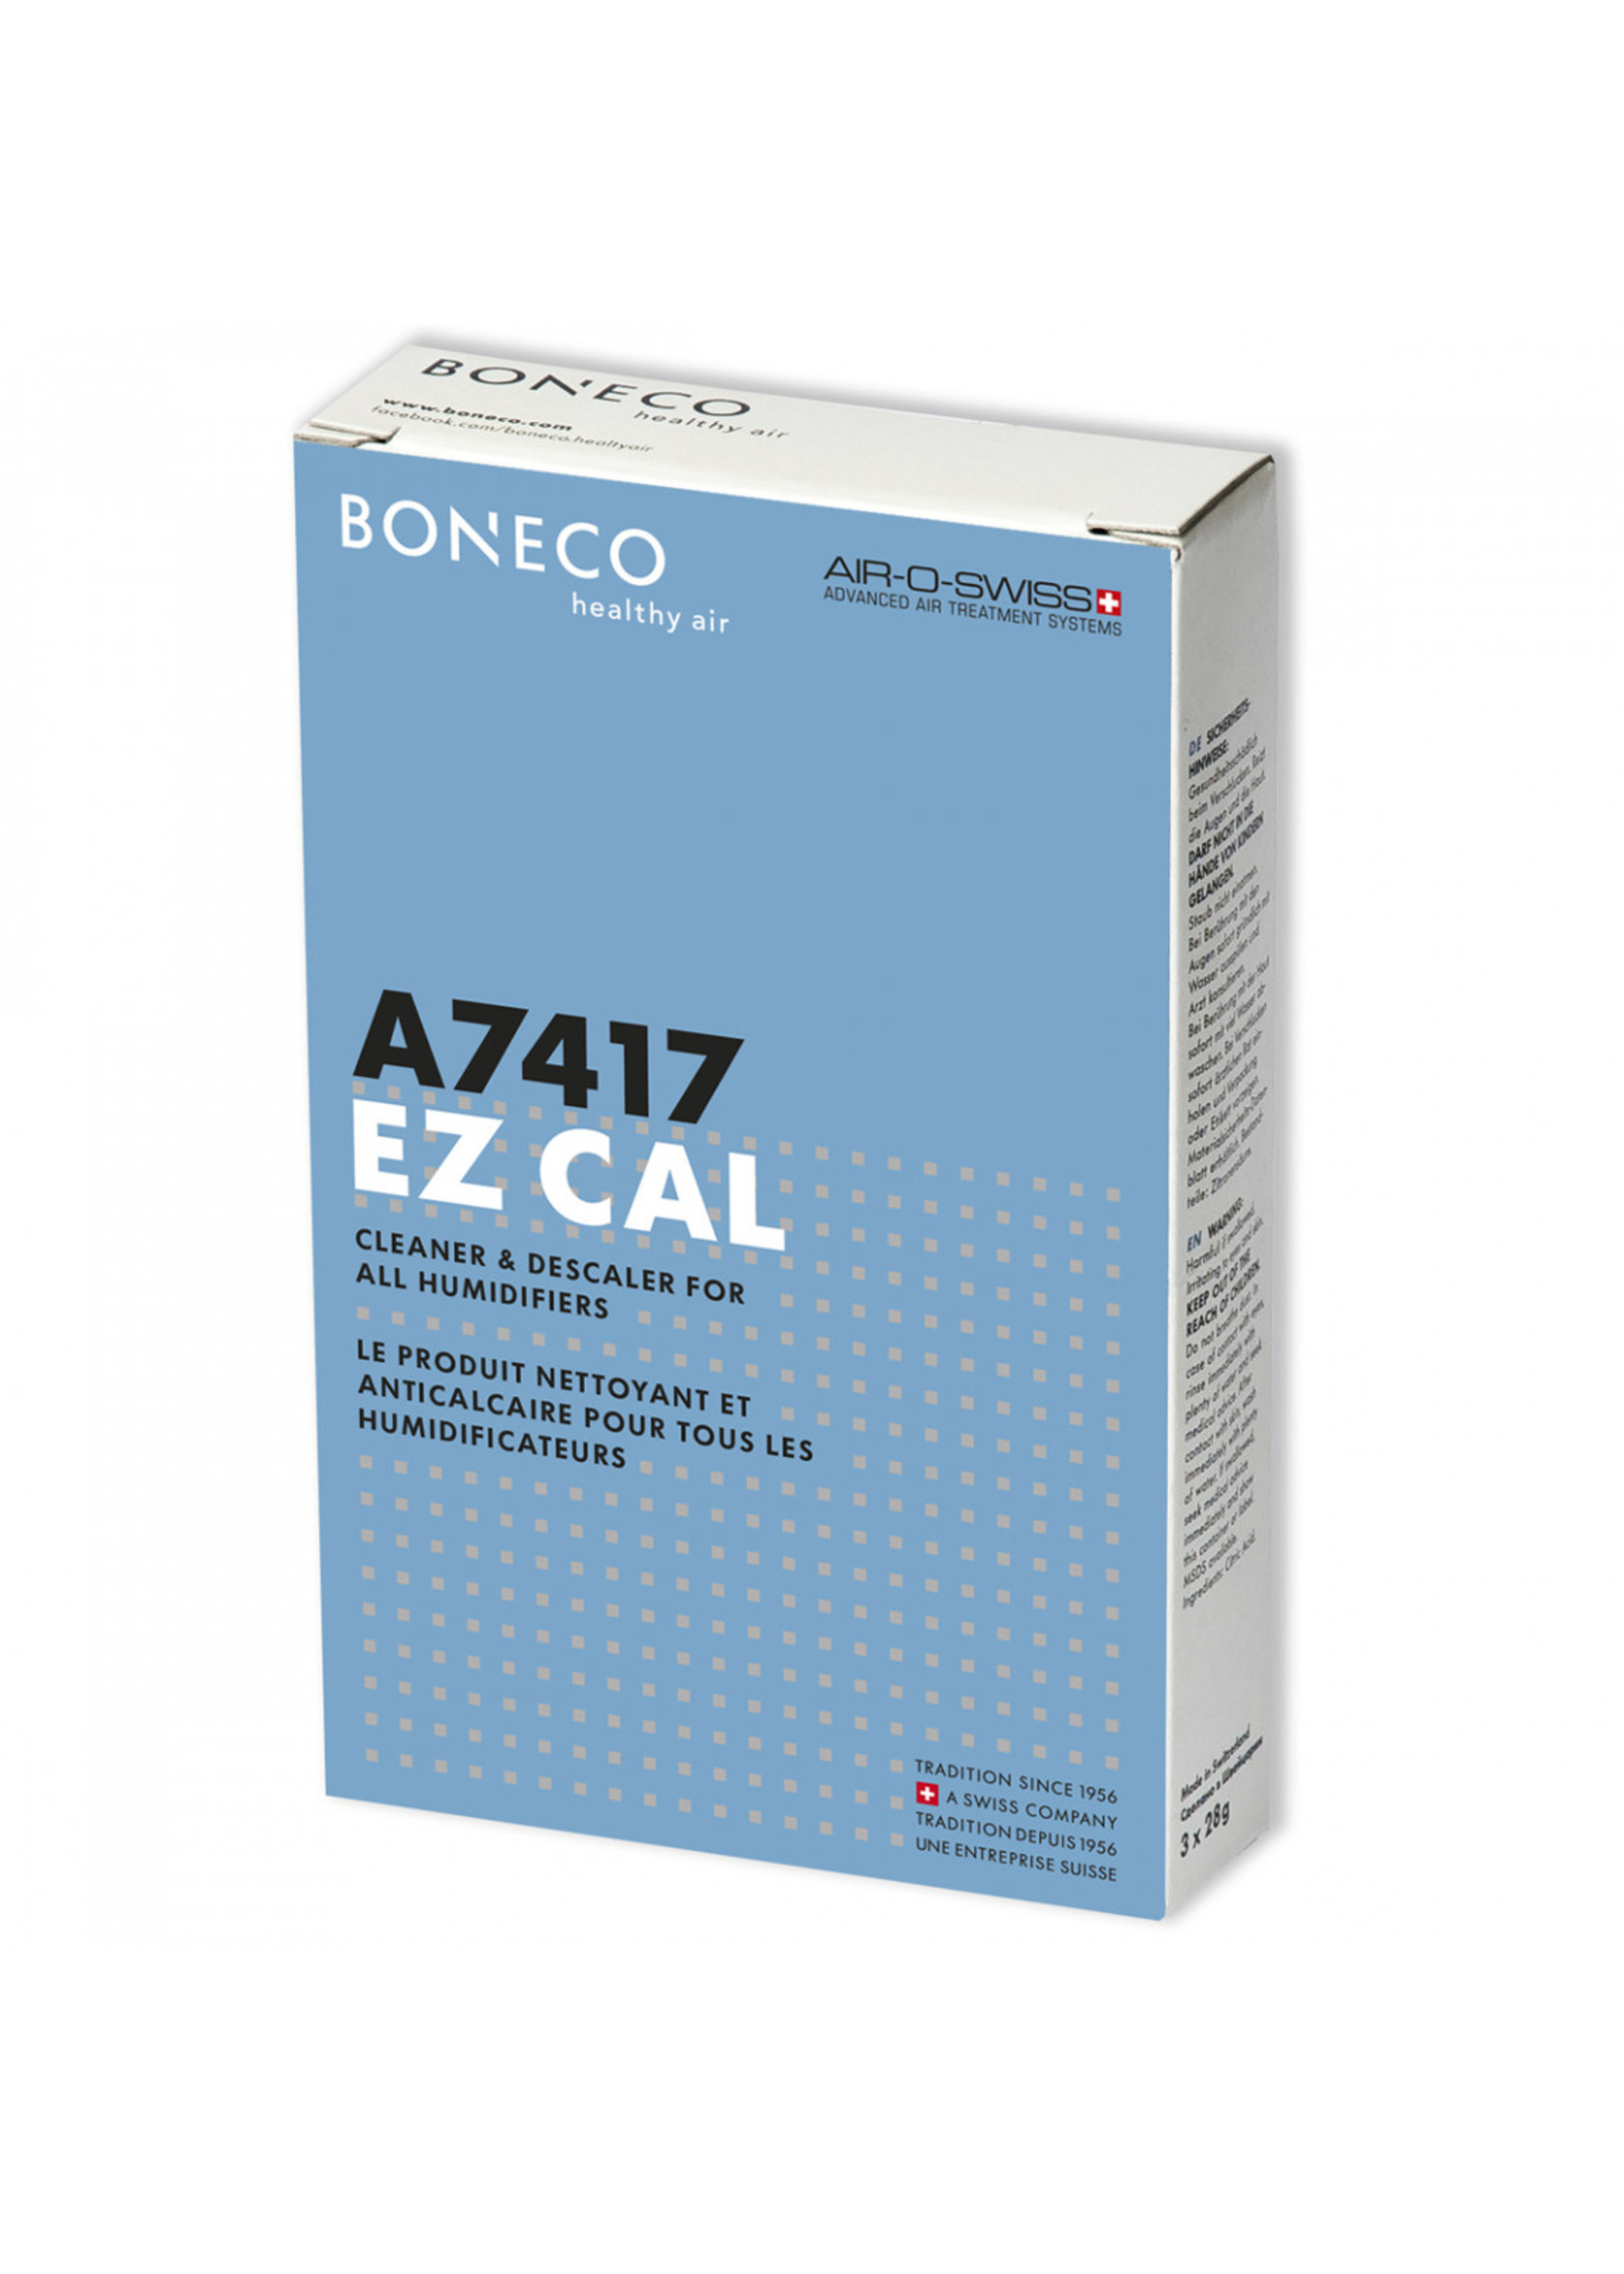 BONECO A7417 AOS NETTOYANT EZCAL (3) HUMID